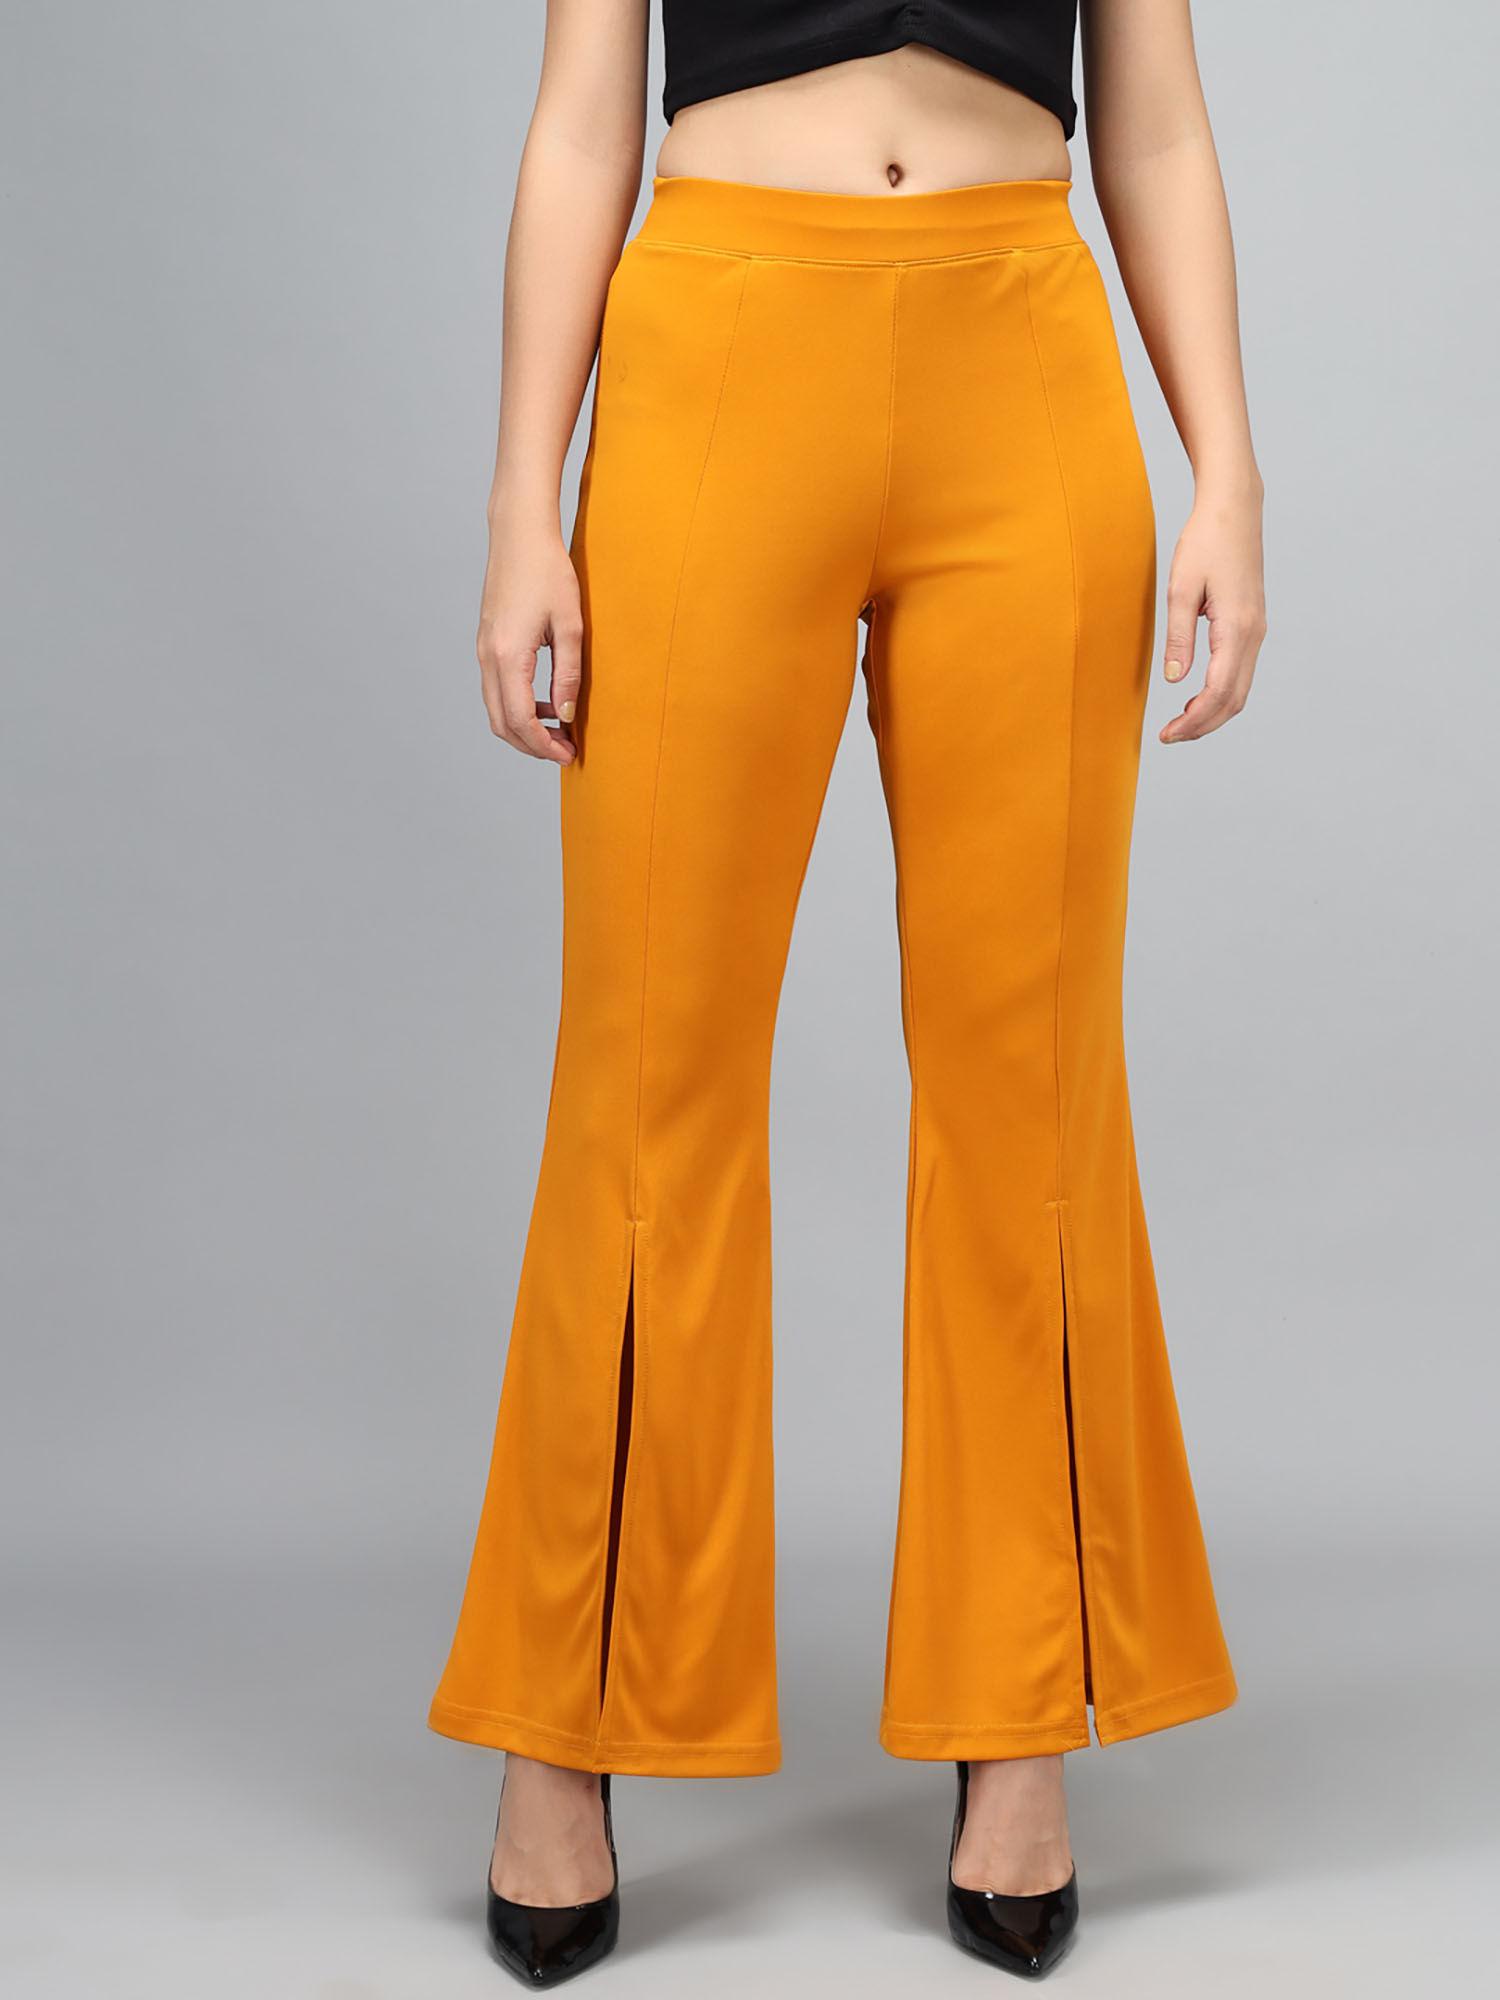 women's high rise poly lycra orange trouser